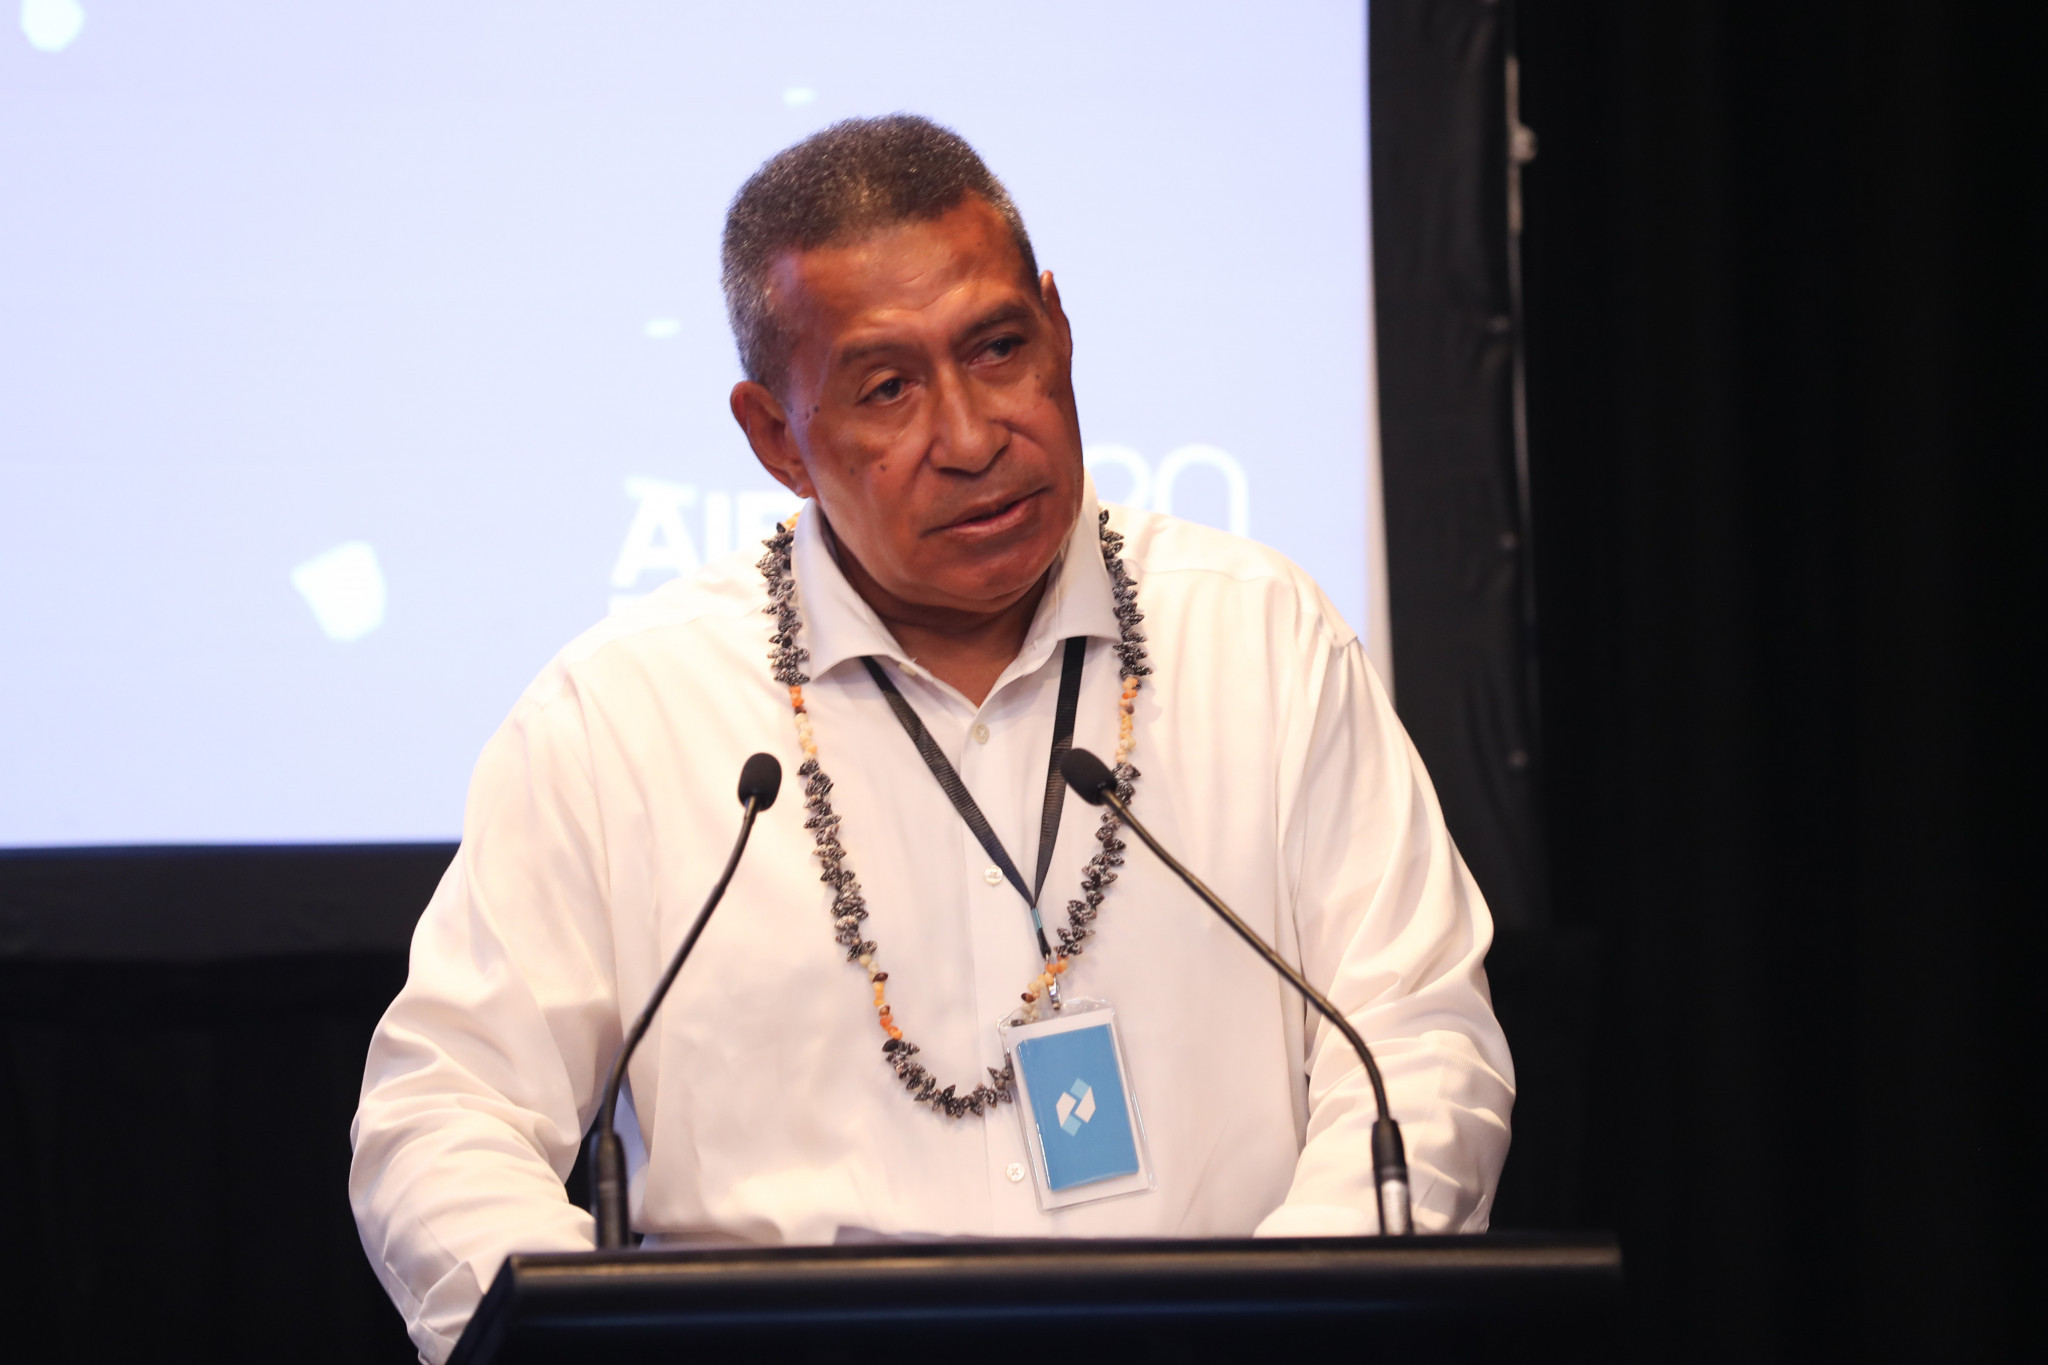 Fiji Amateur Boxing Association President Manasa Baravilala claimed that Oceania has been 